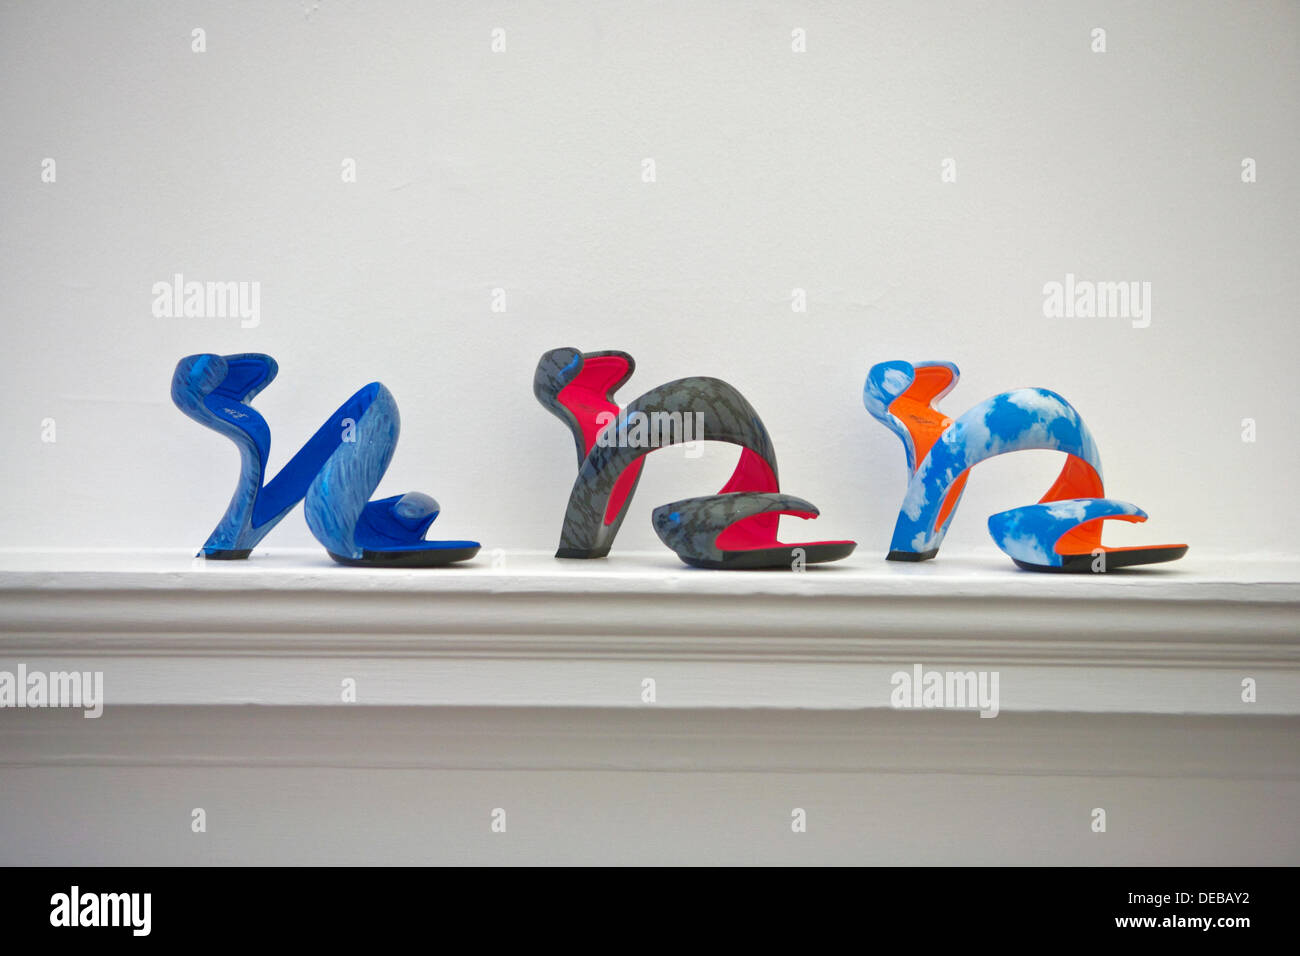 London Fashion Week at Somerset House: latest designs from emerging talent. Shoe designer Julian Hakes modern fashion shoes Stock Photo